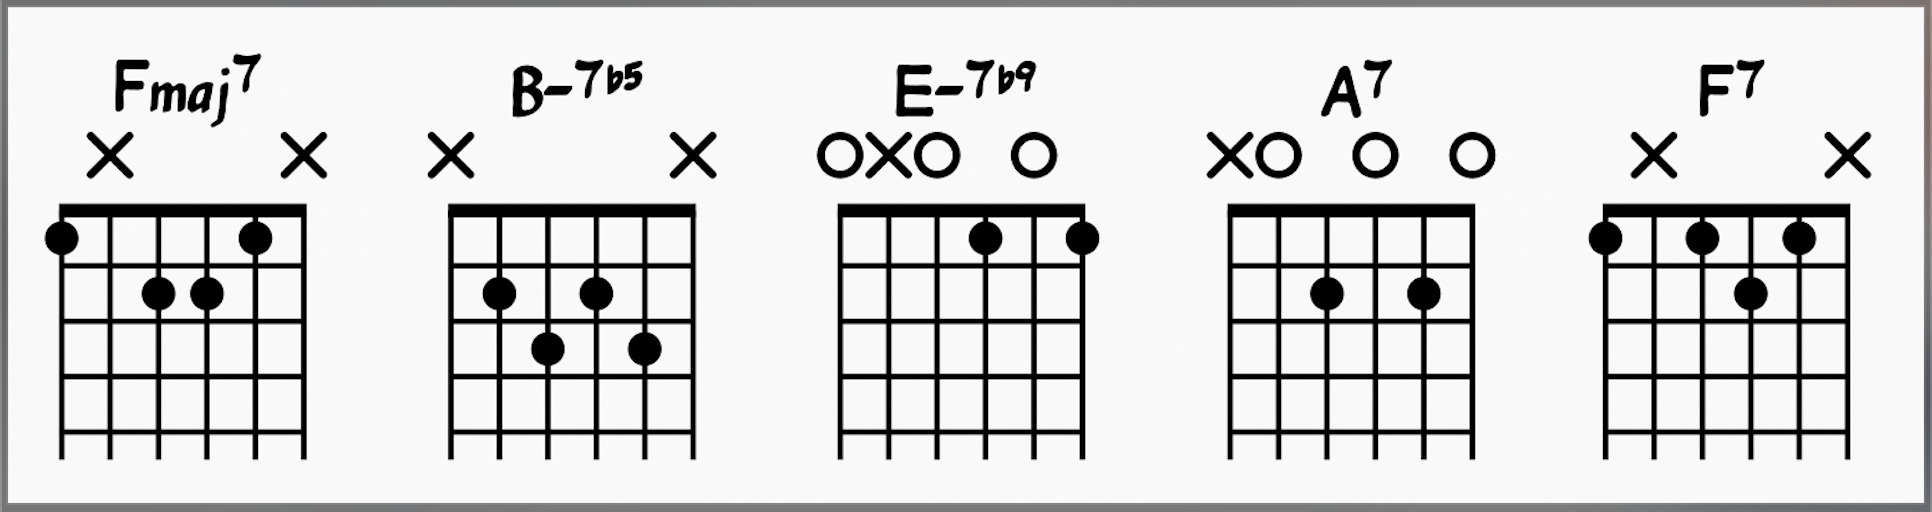 Chord shapes for Fmaj7, B-7b5, E7b9, and A7